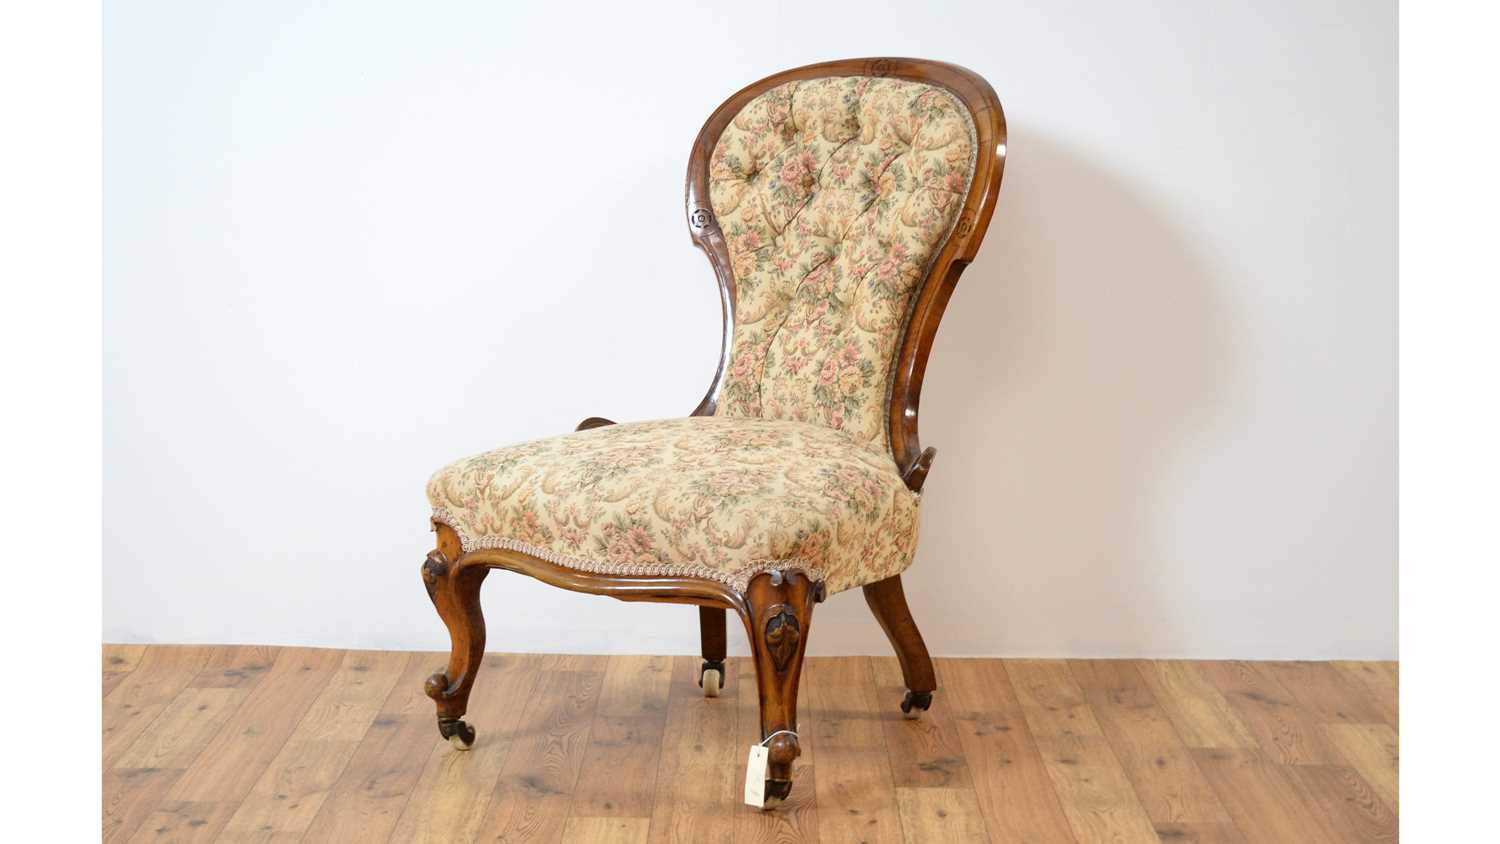 A 19th Century Victorian spoonback mahogany framed salon chair